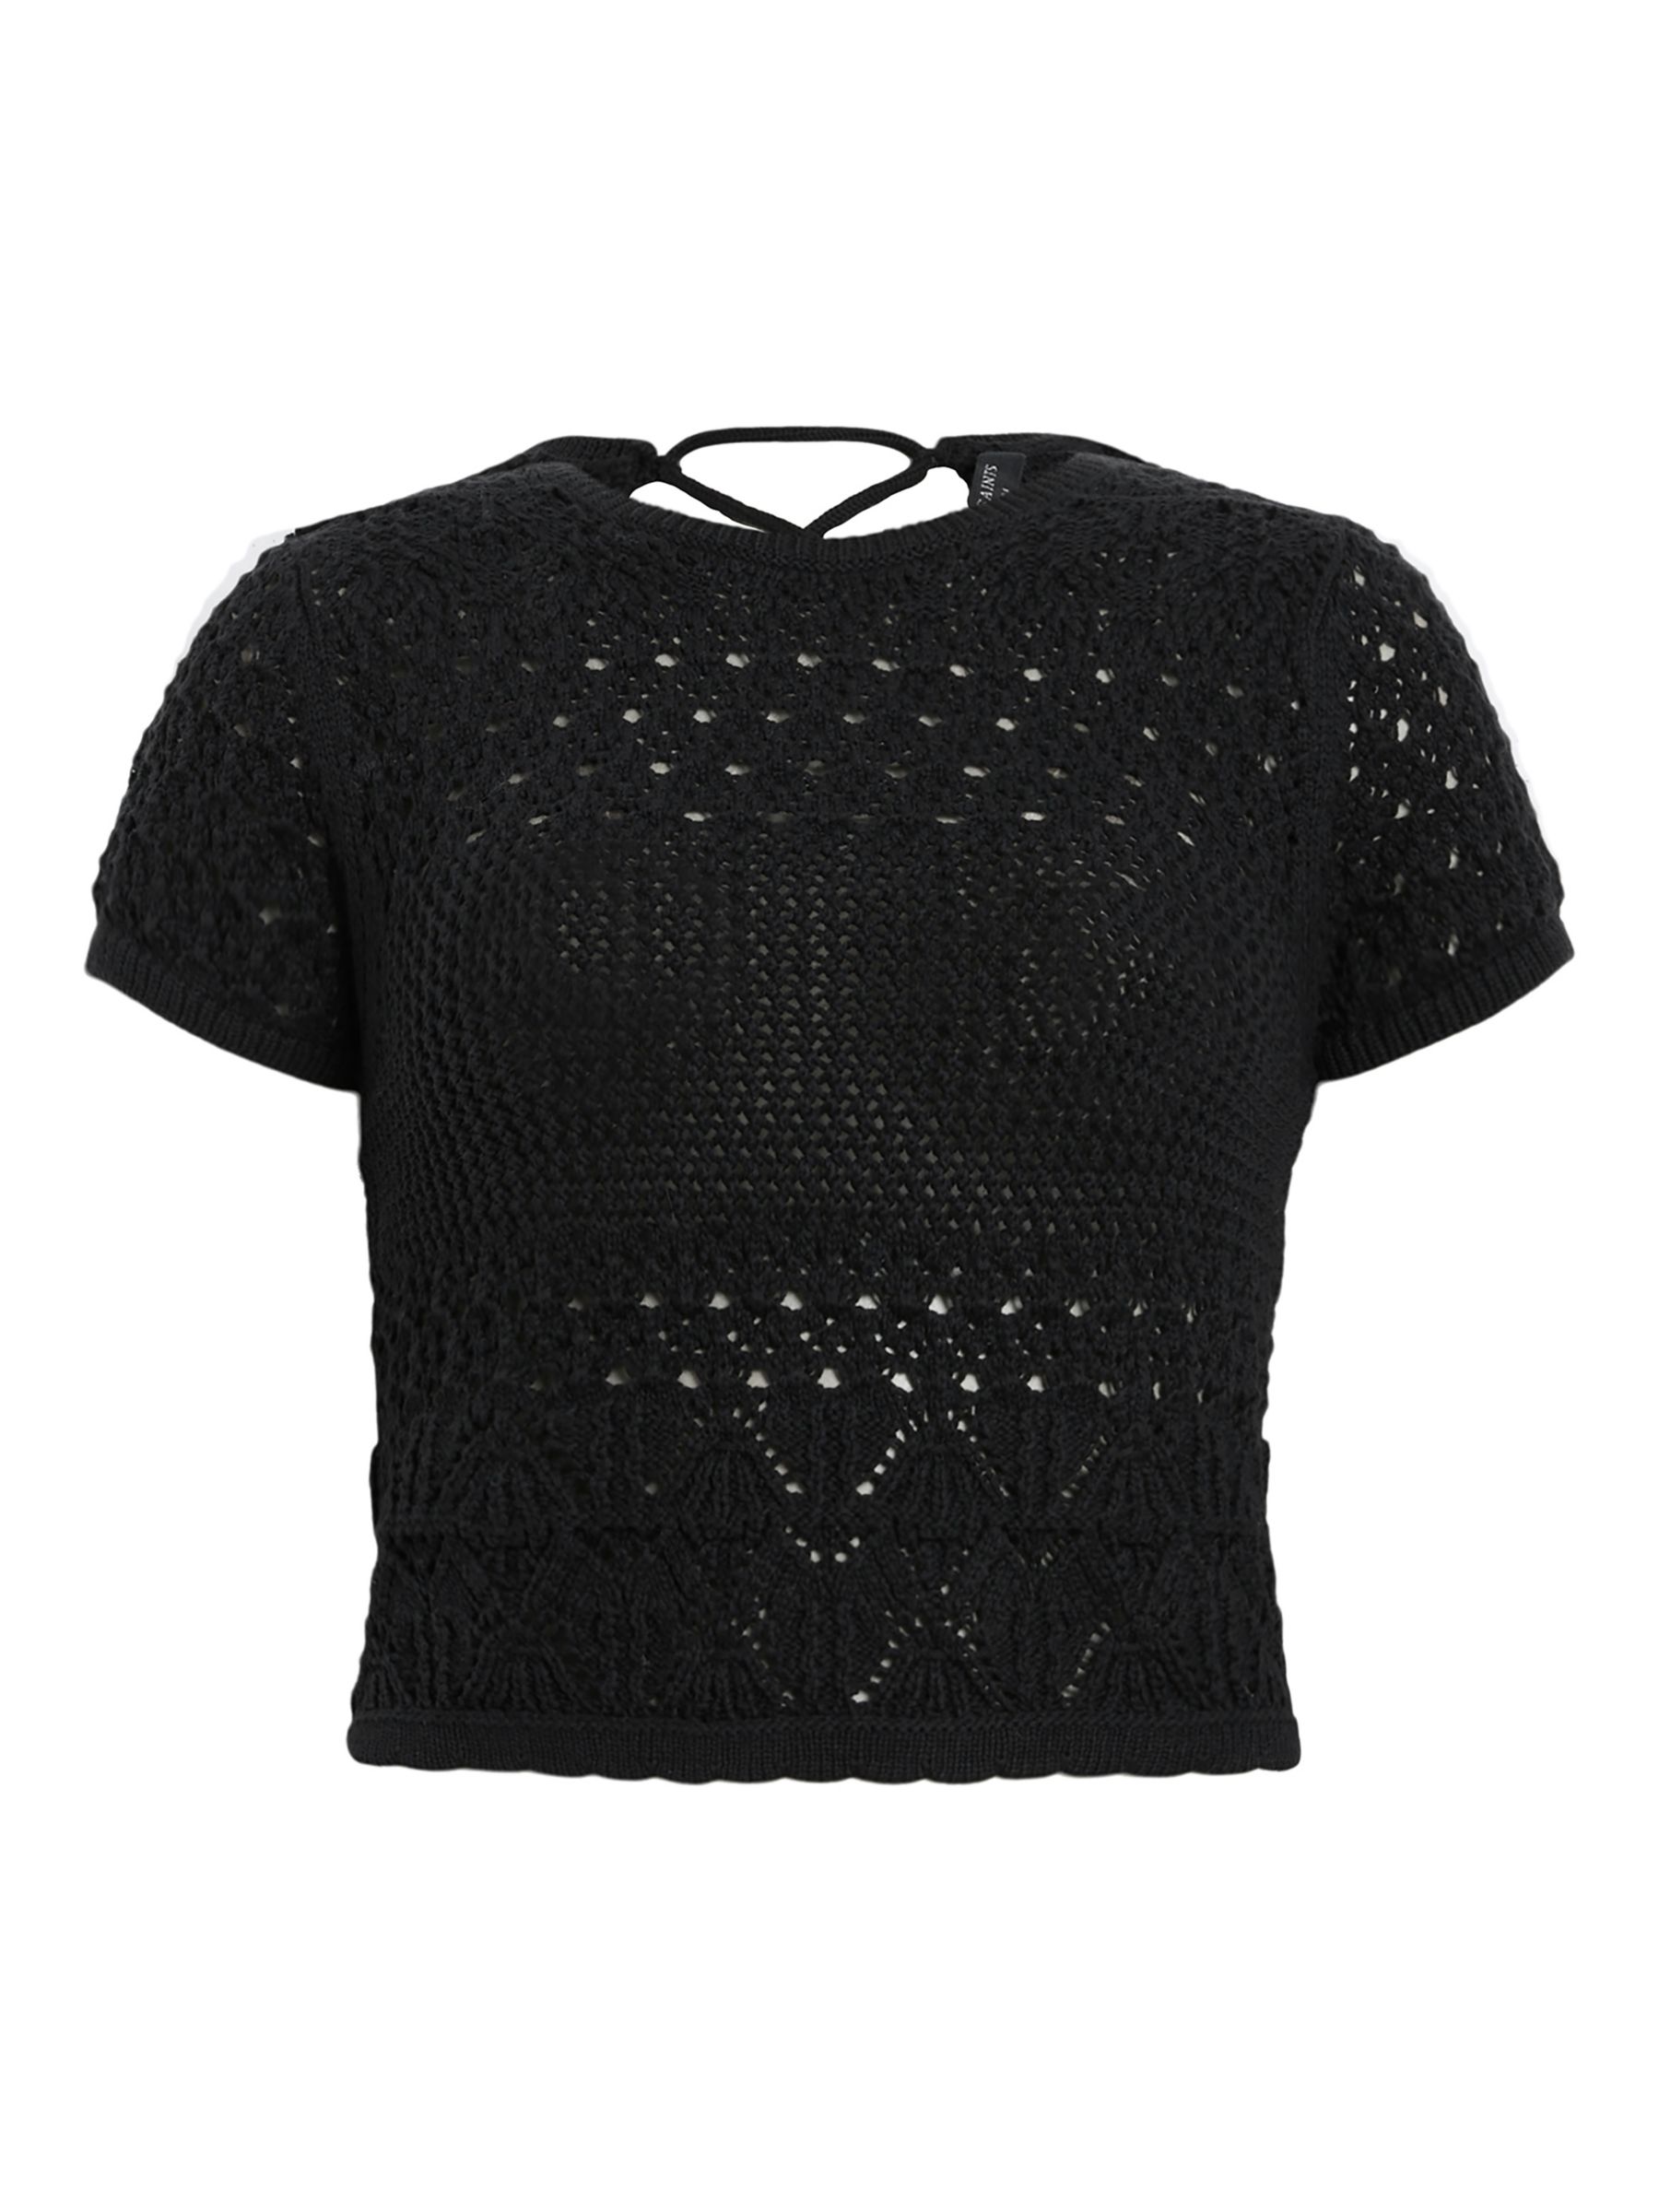 AllSaints Briar Short Sleeve Crochet Knit Top, Black, L